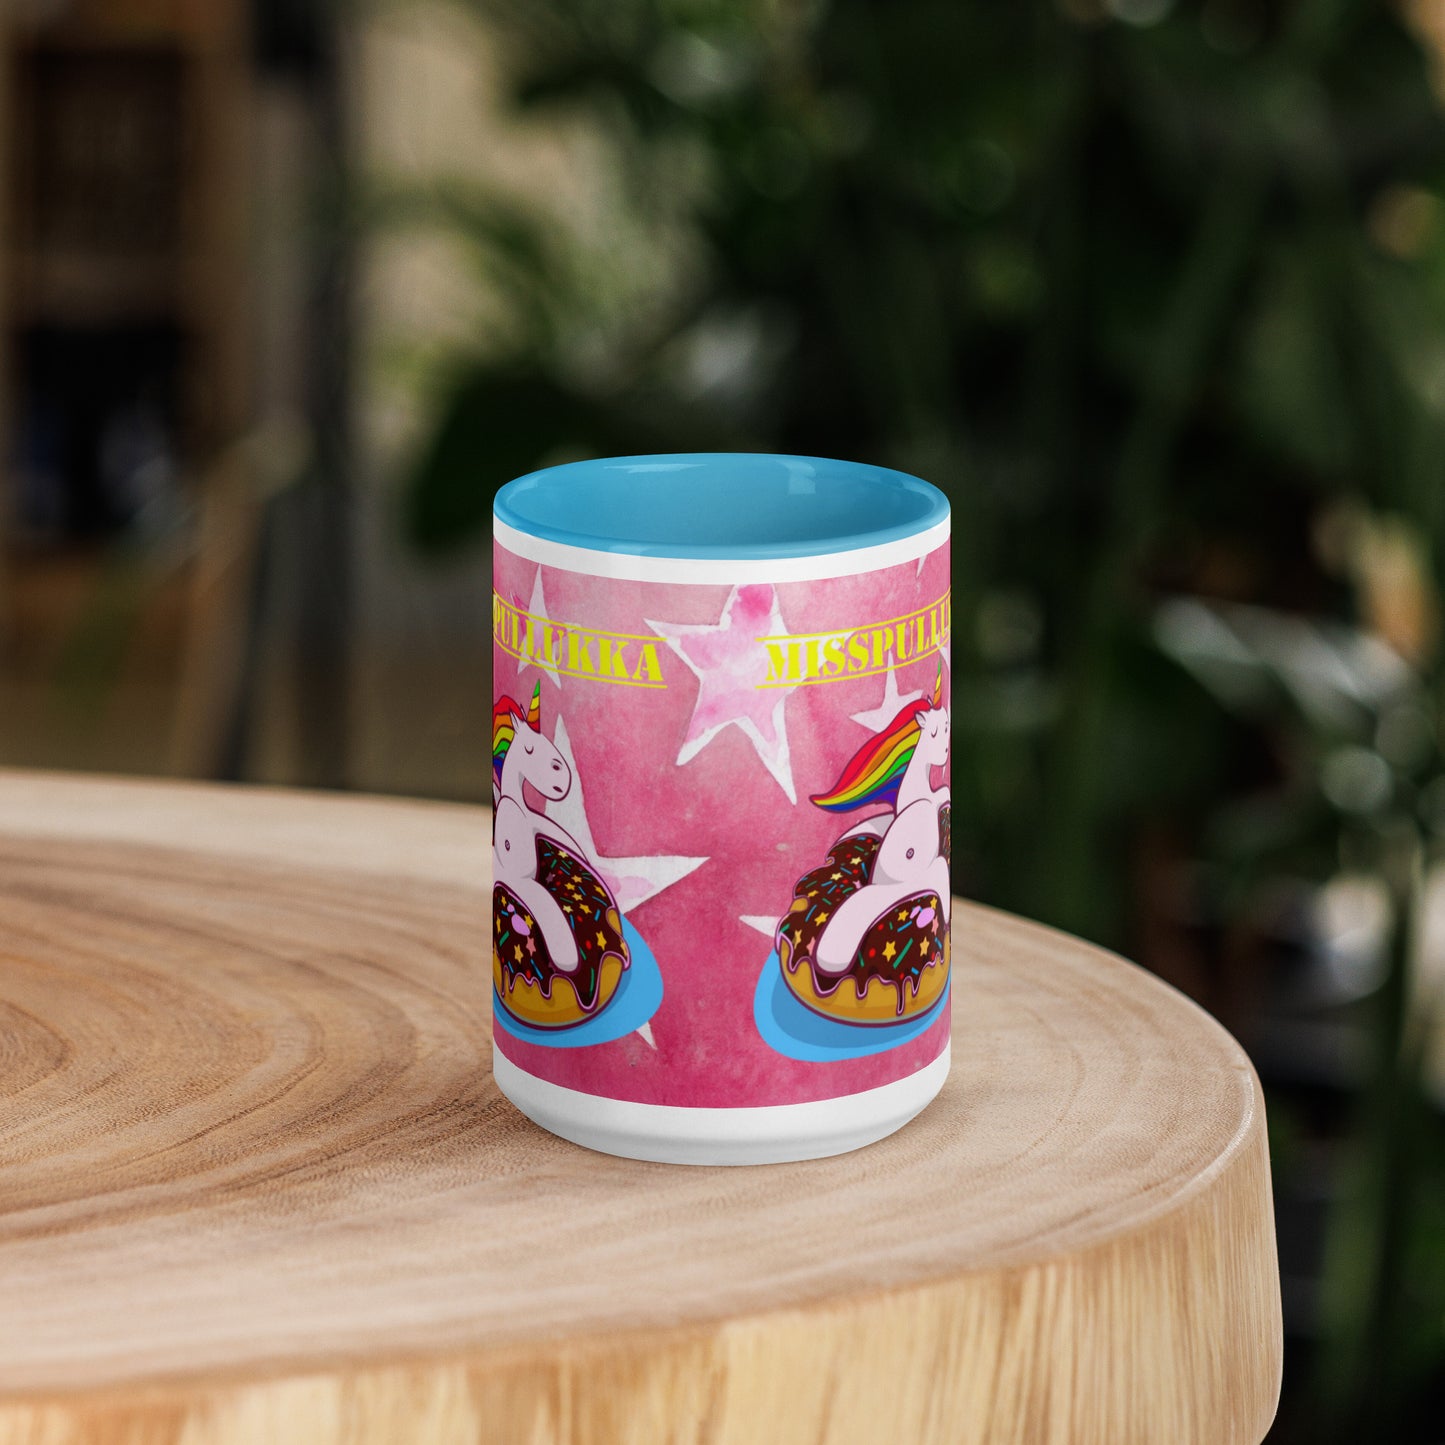 "MissPullukka" ceramic Mug